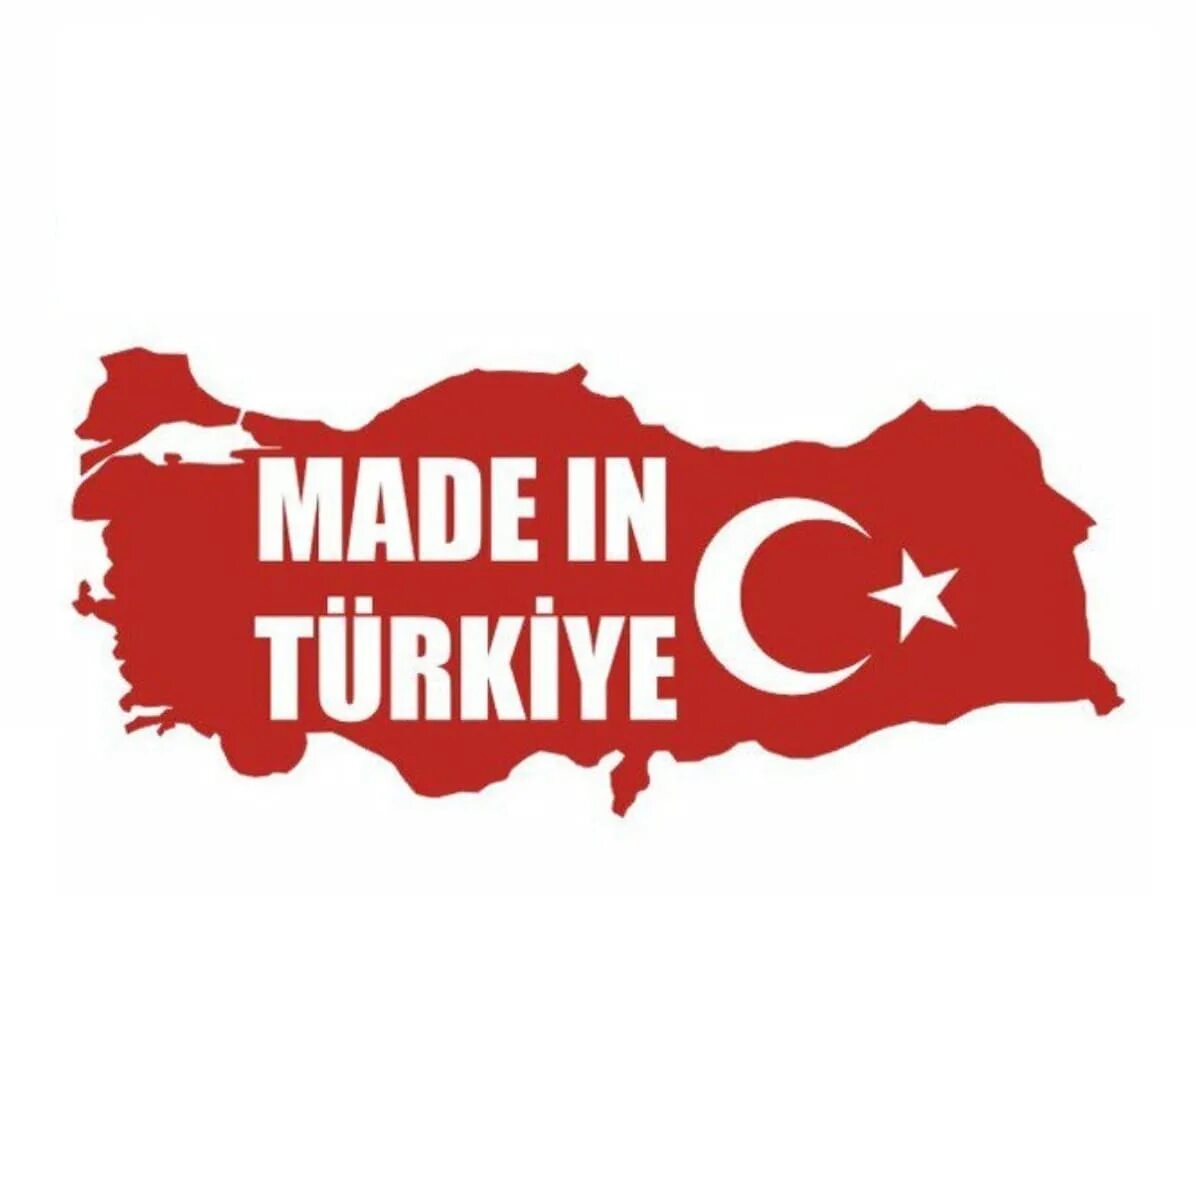 Turkey html. Маде ин Турция. Made in Turkey логотип. Произведено в Турции. Знак сделано в Турции.